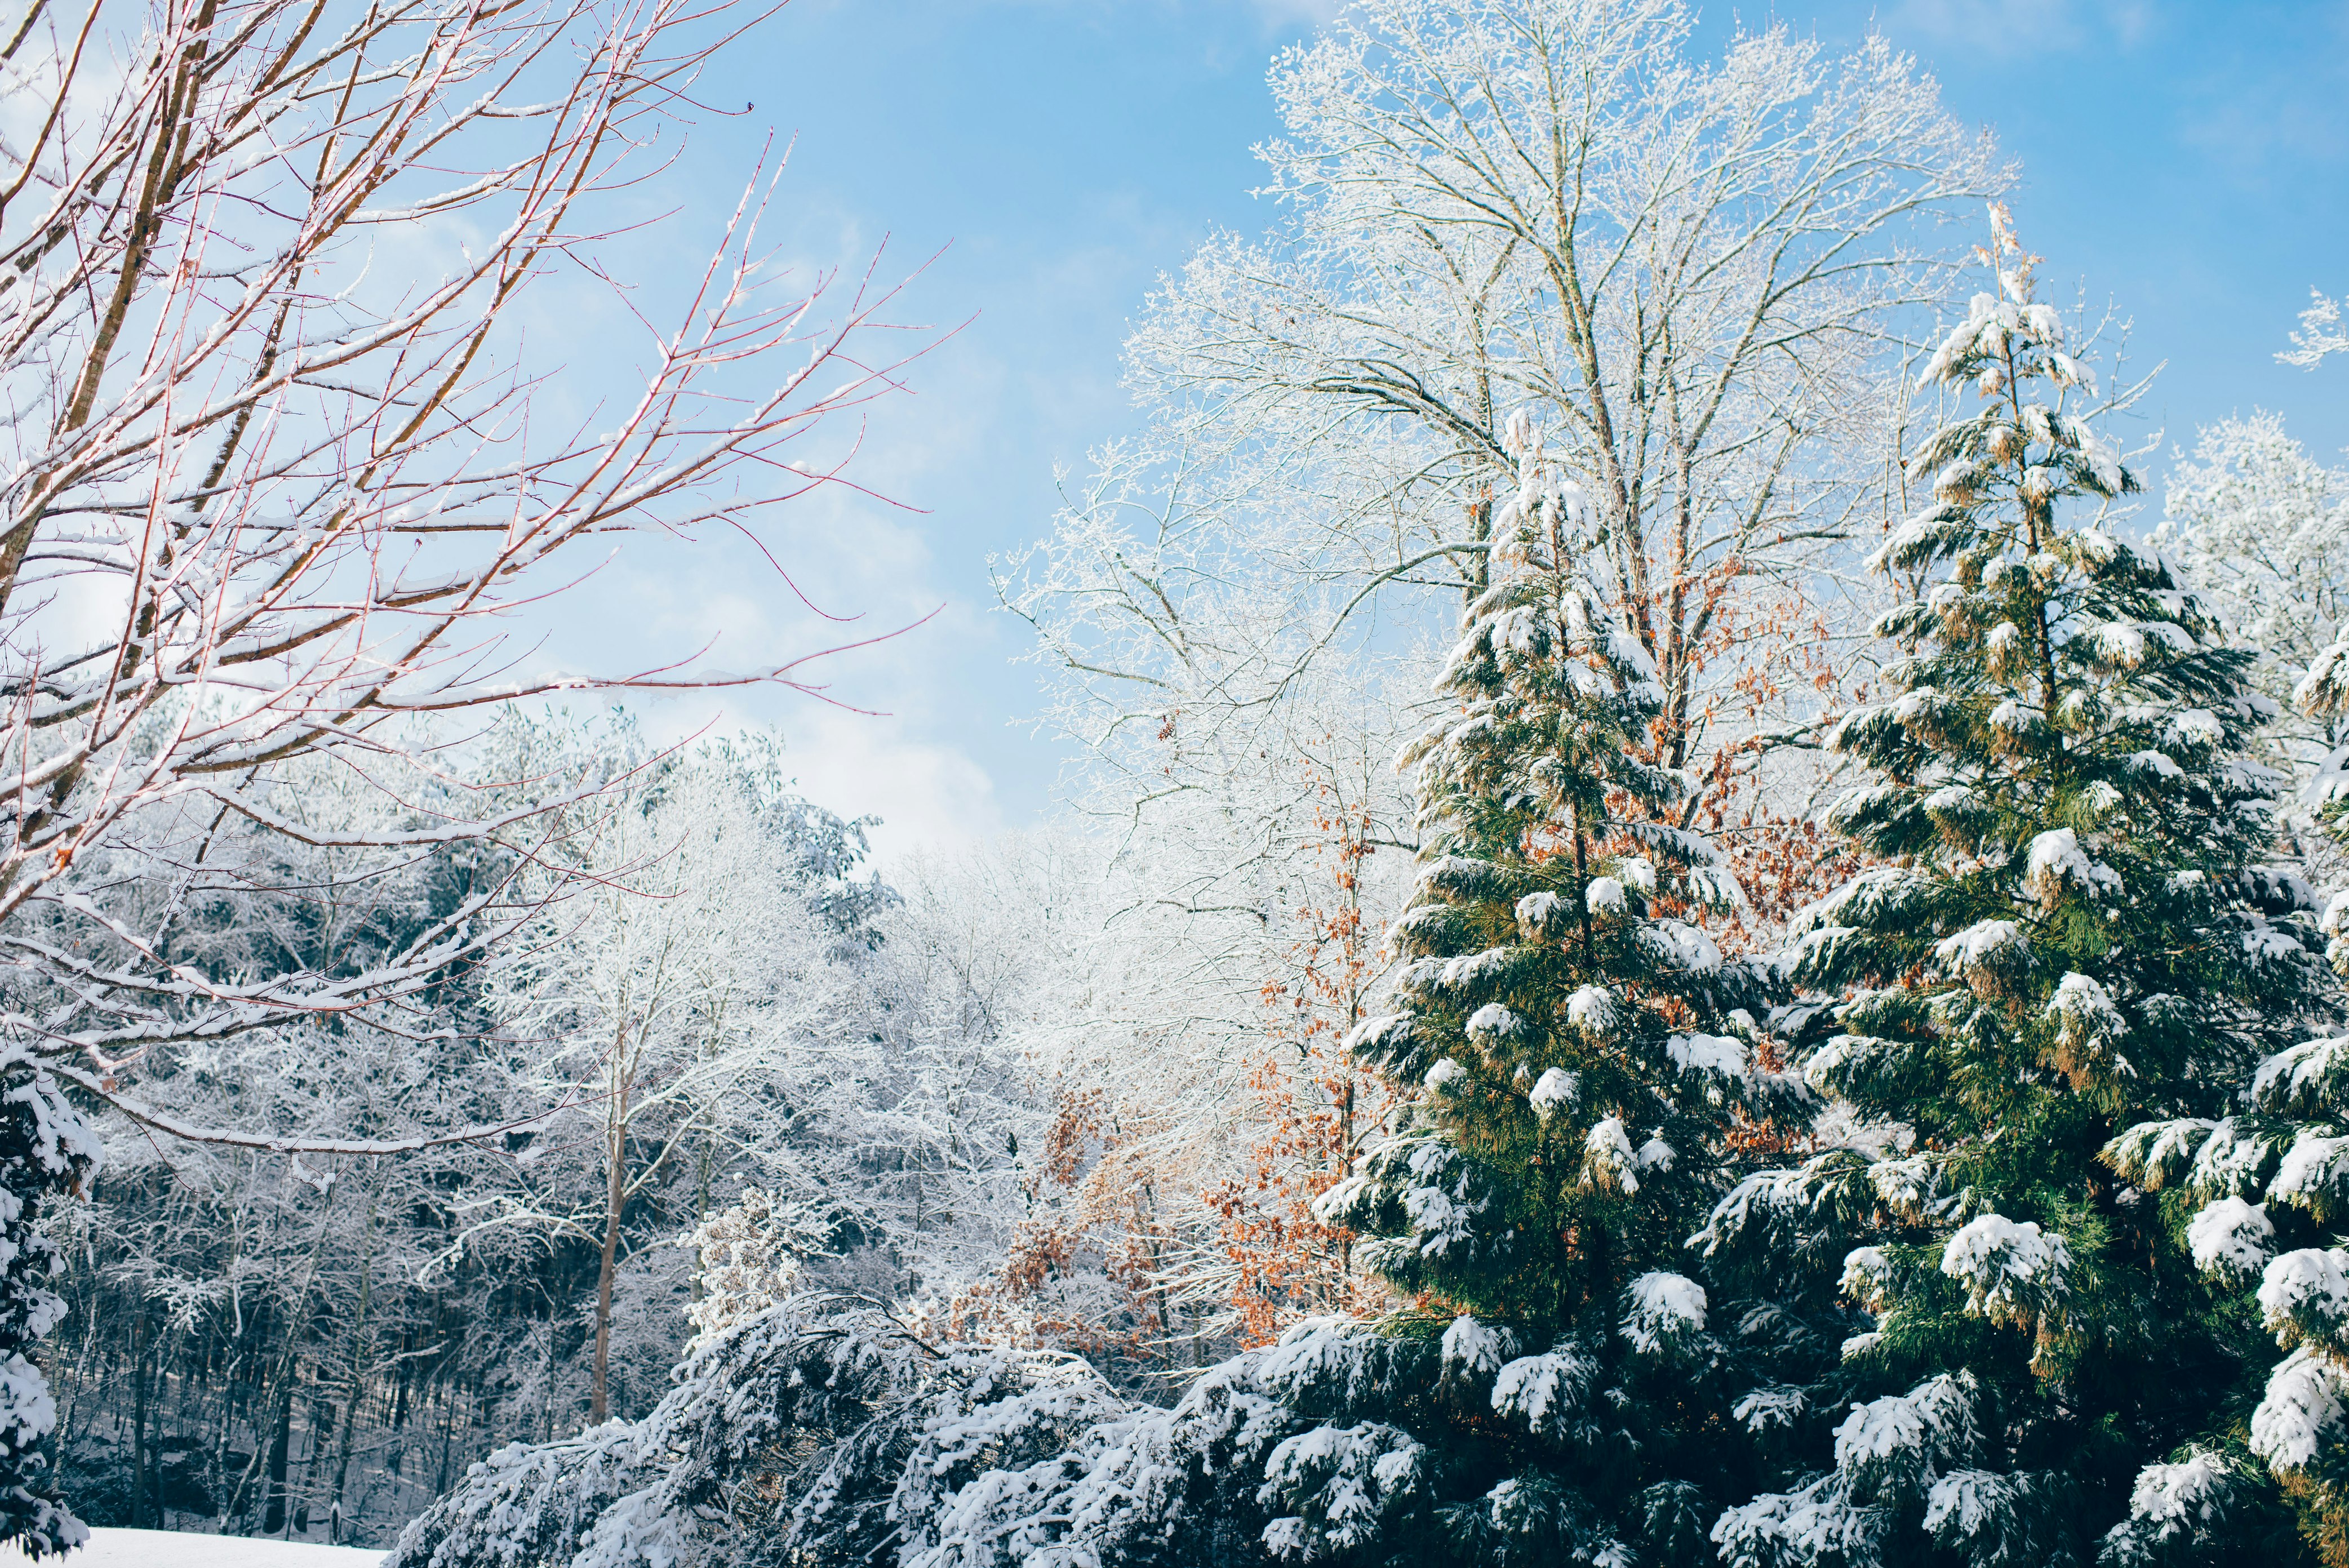 https://unsplash.com/photos/green-pine-trees-during-snow-season-dqMxDqdhg_4